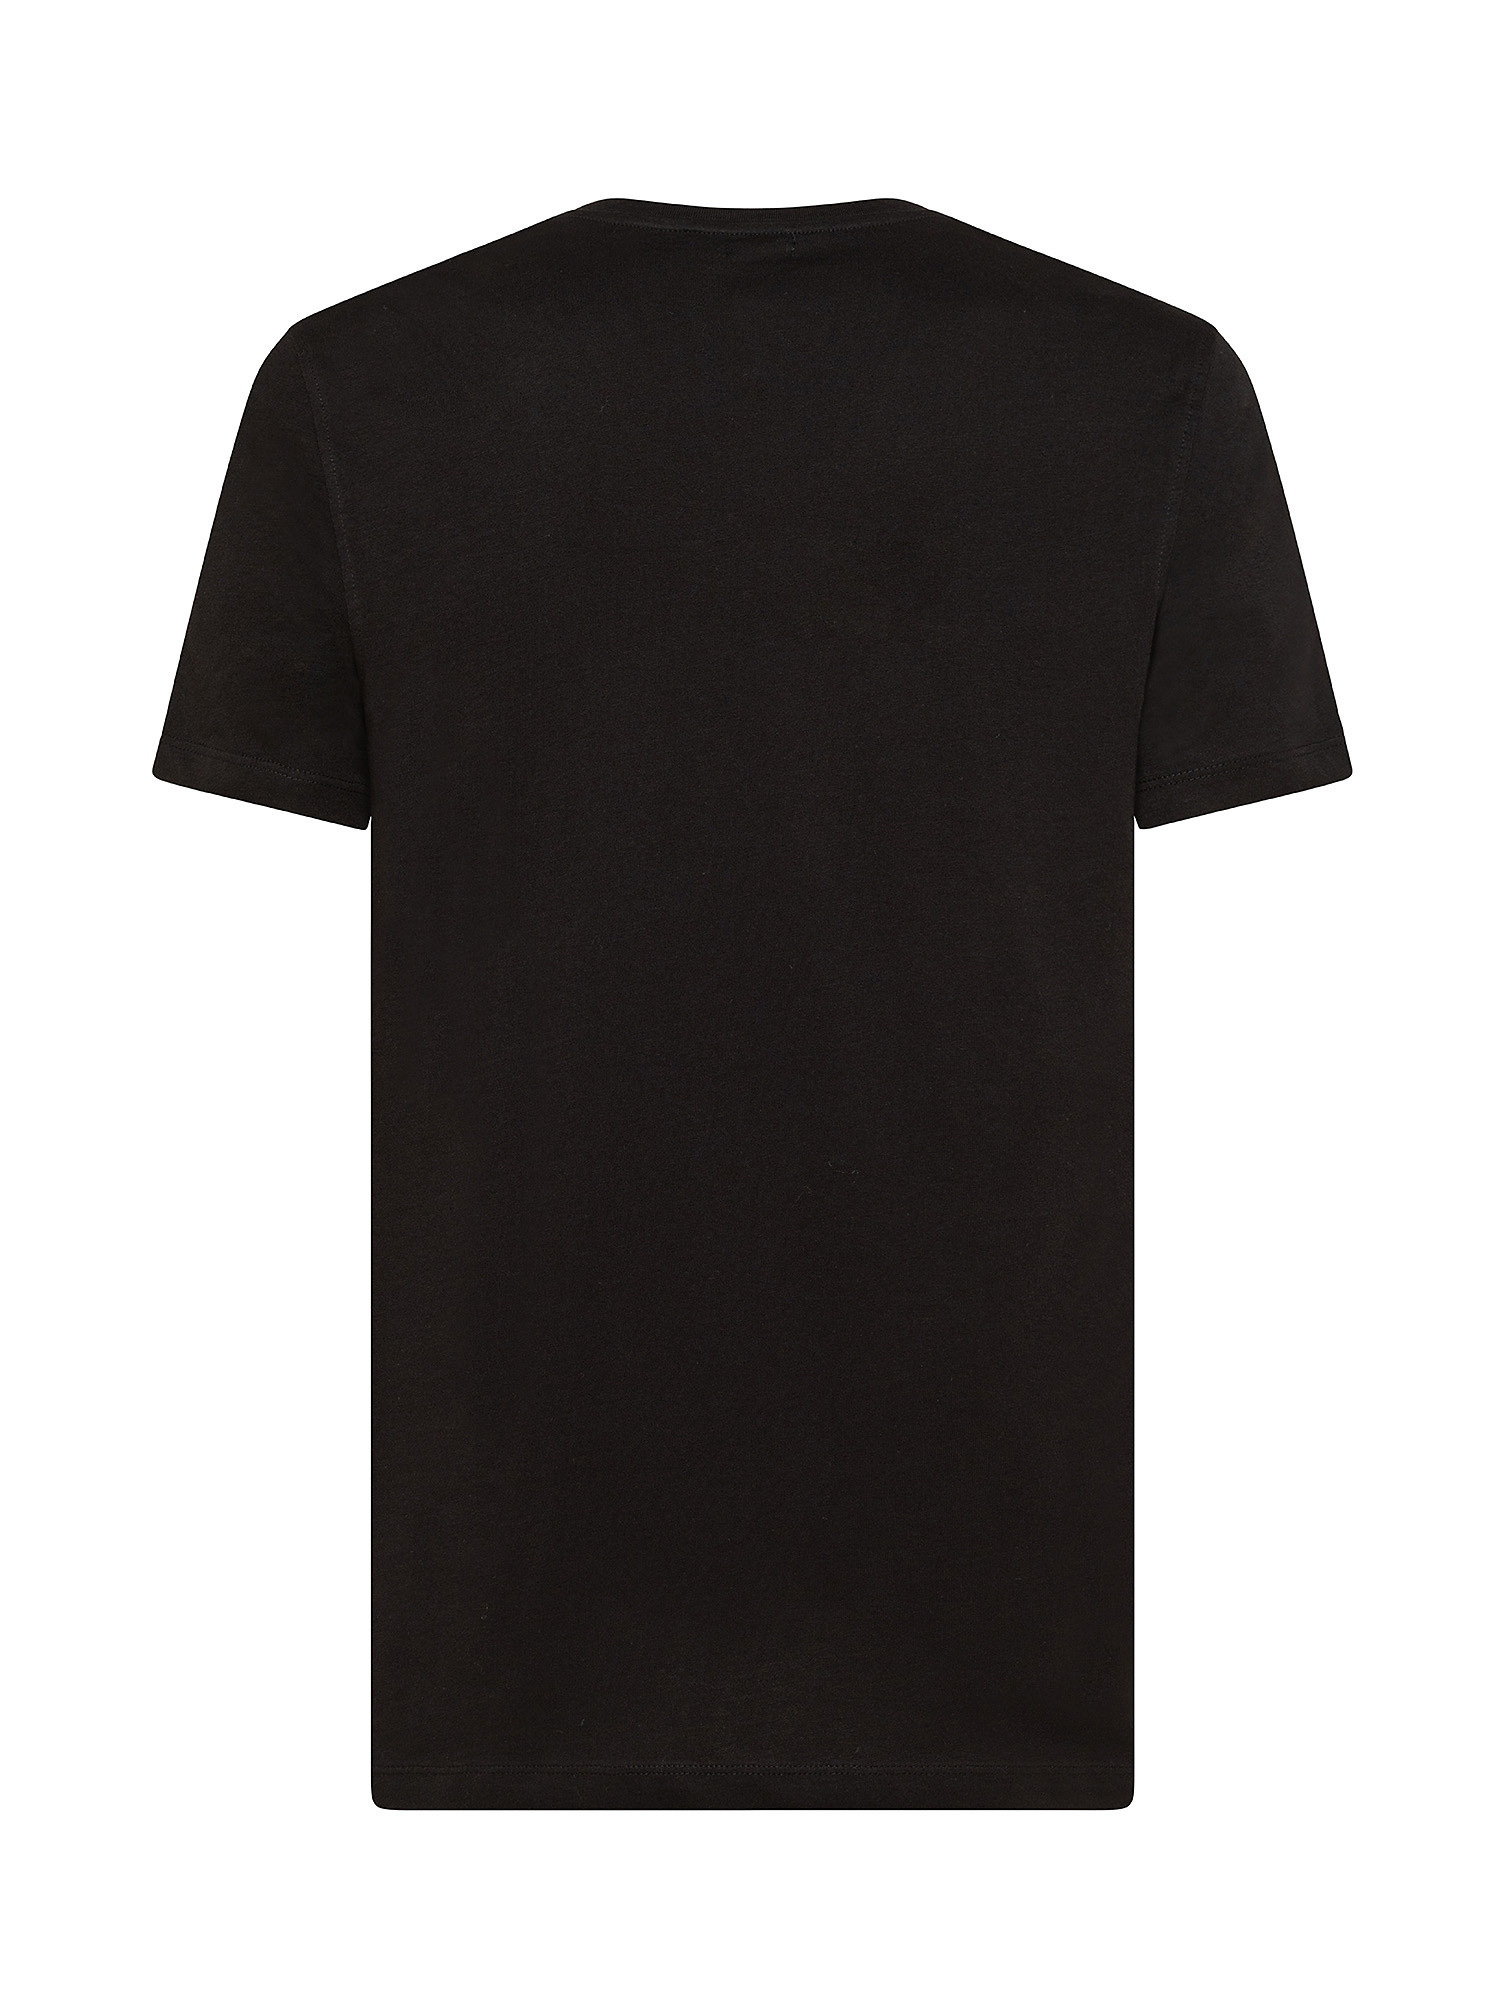 Luca D'Altieri - Supima cotton V-neck T-shirt, Black, large image number 1